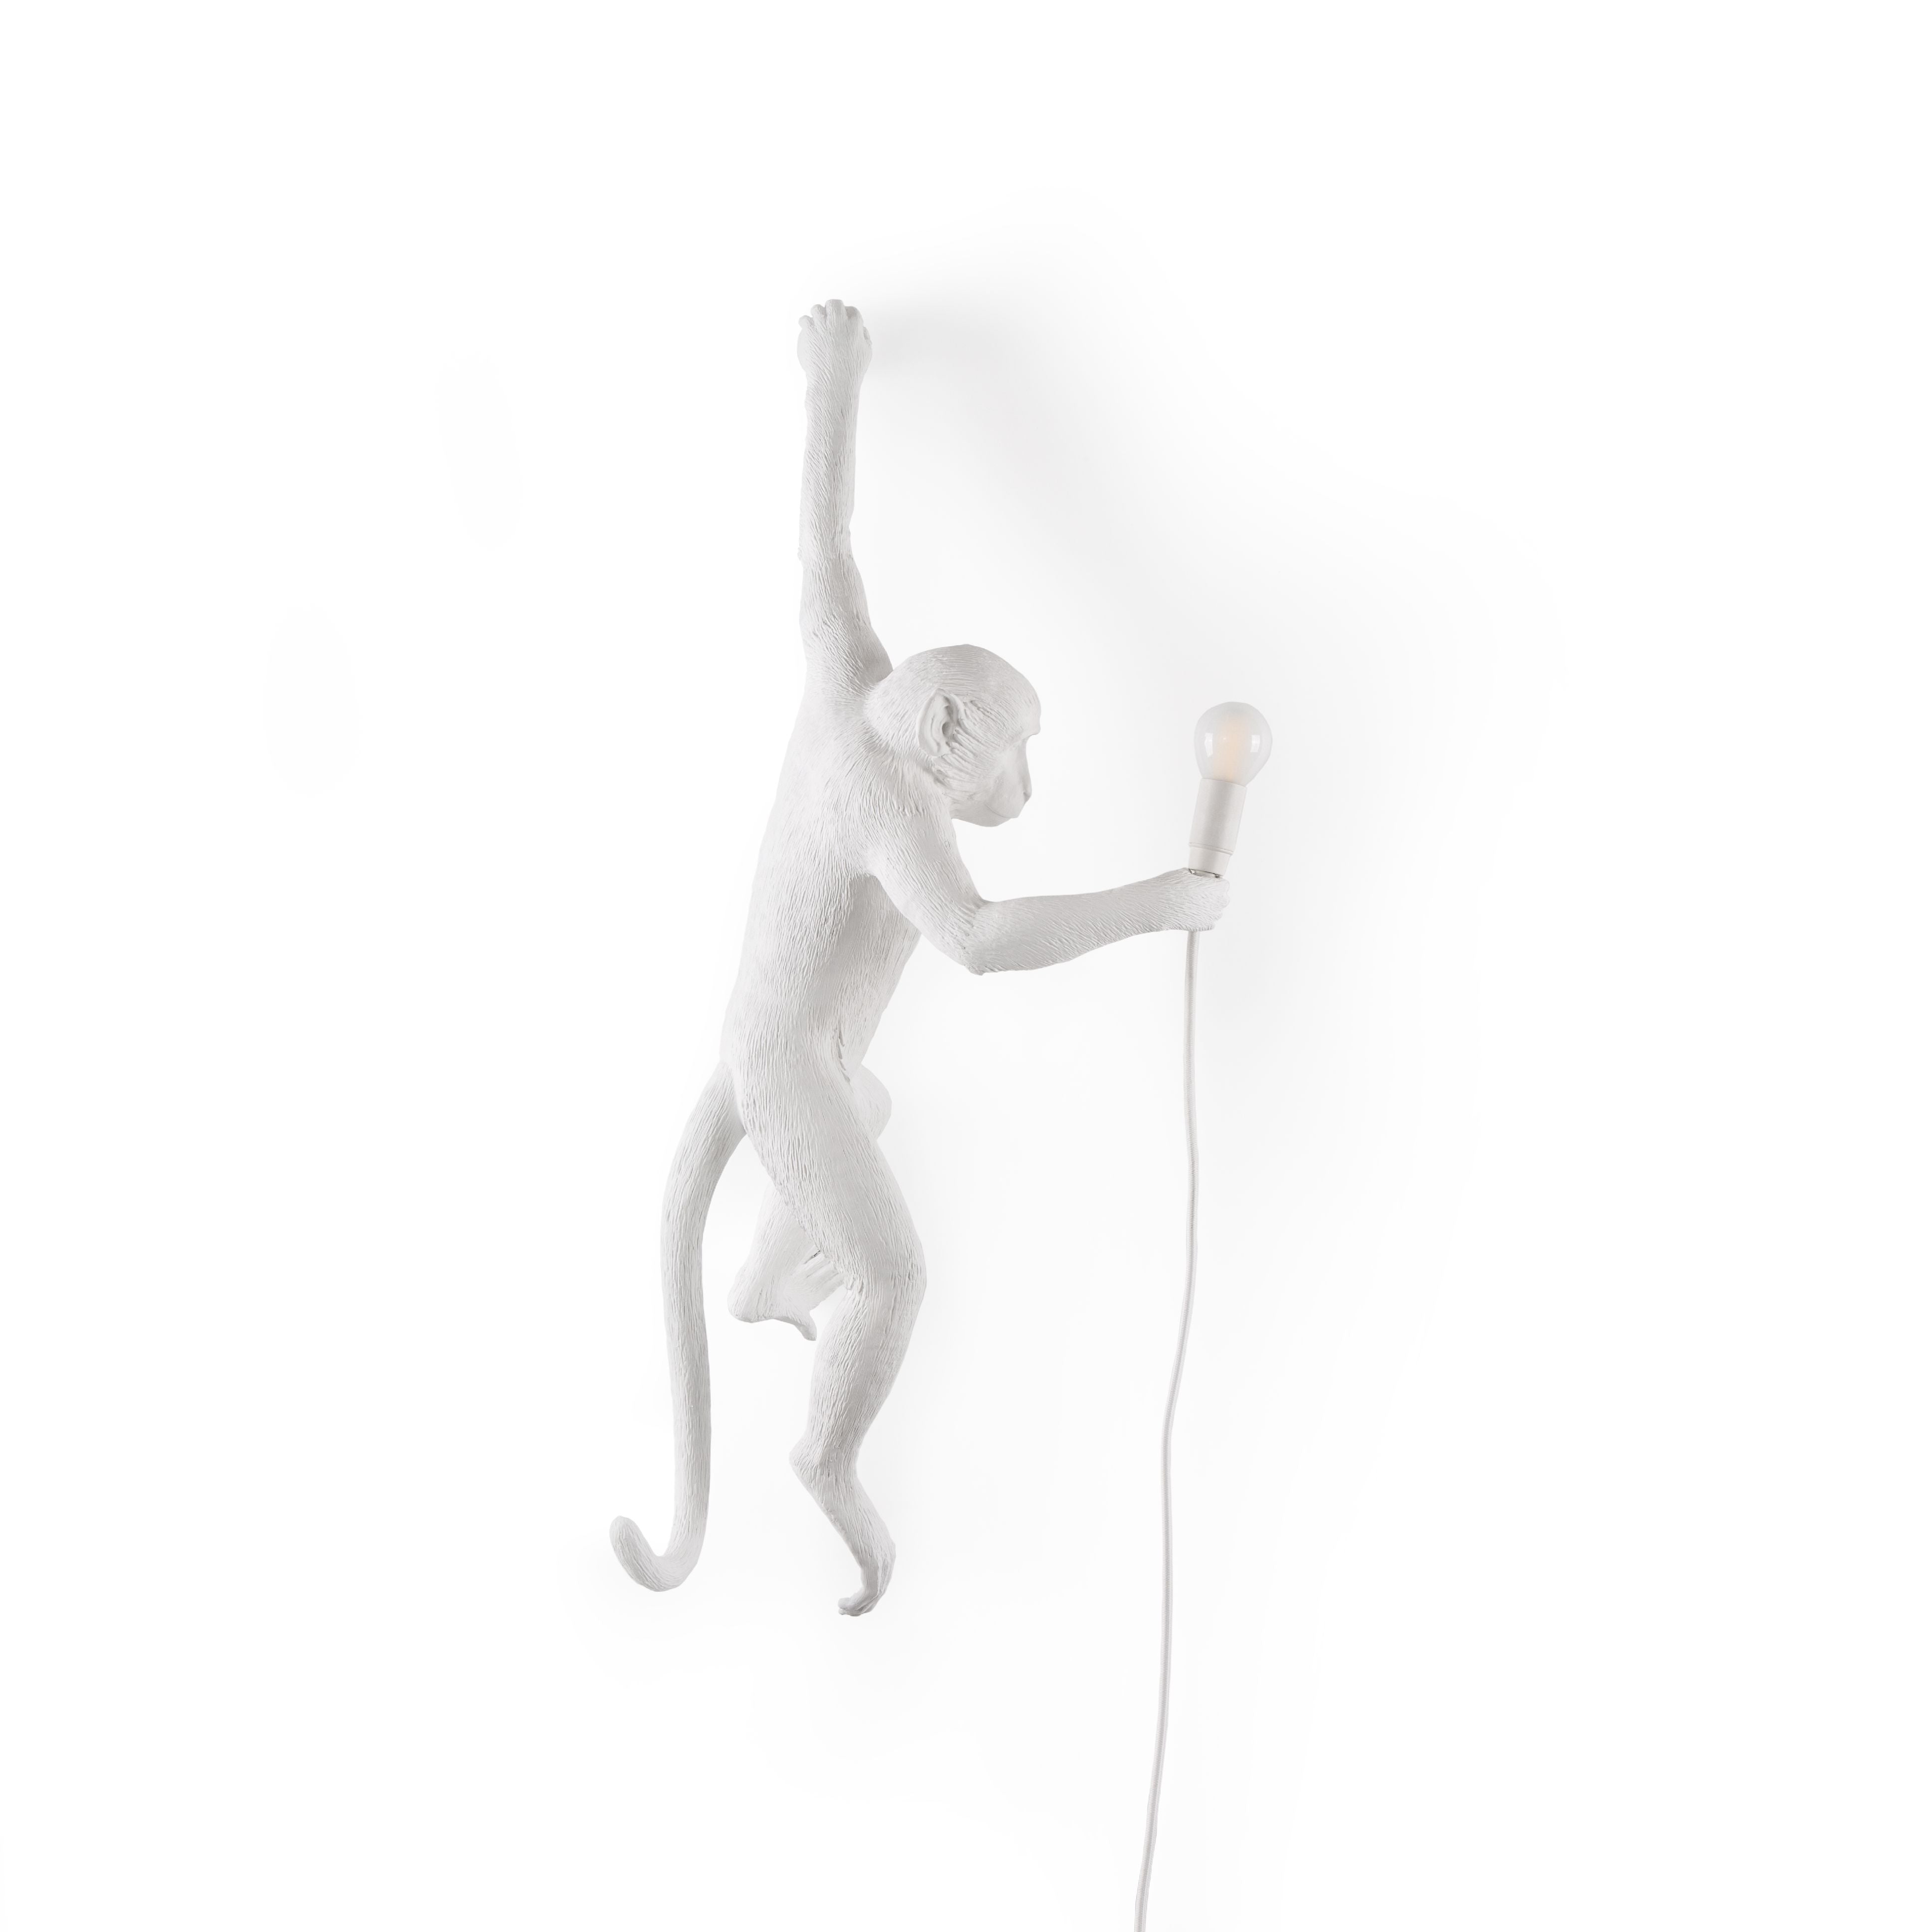 Seletti Monkey Lampa biała, wisząca lewa ręka